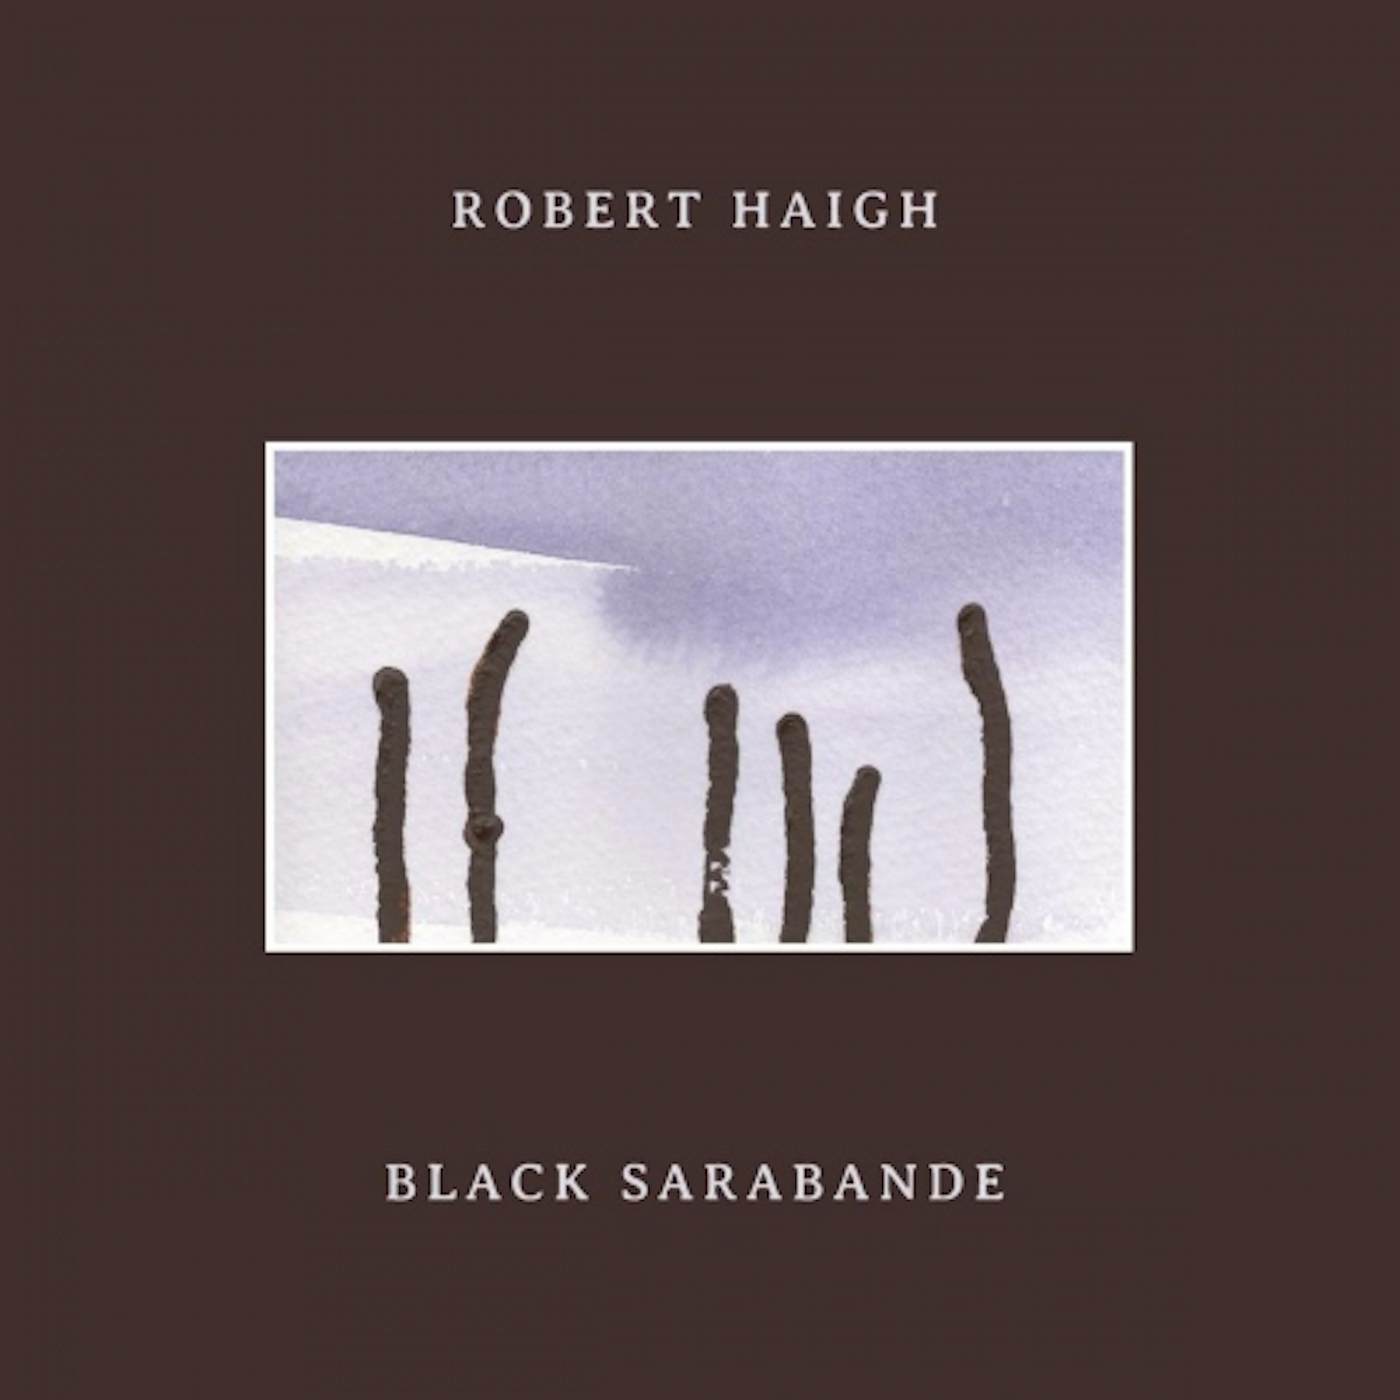 Robert Haigh Black Sarabande Vinyl Record